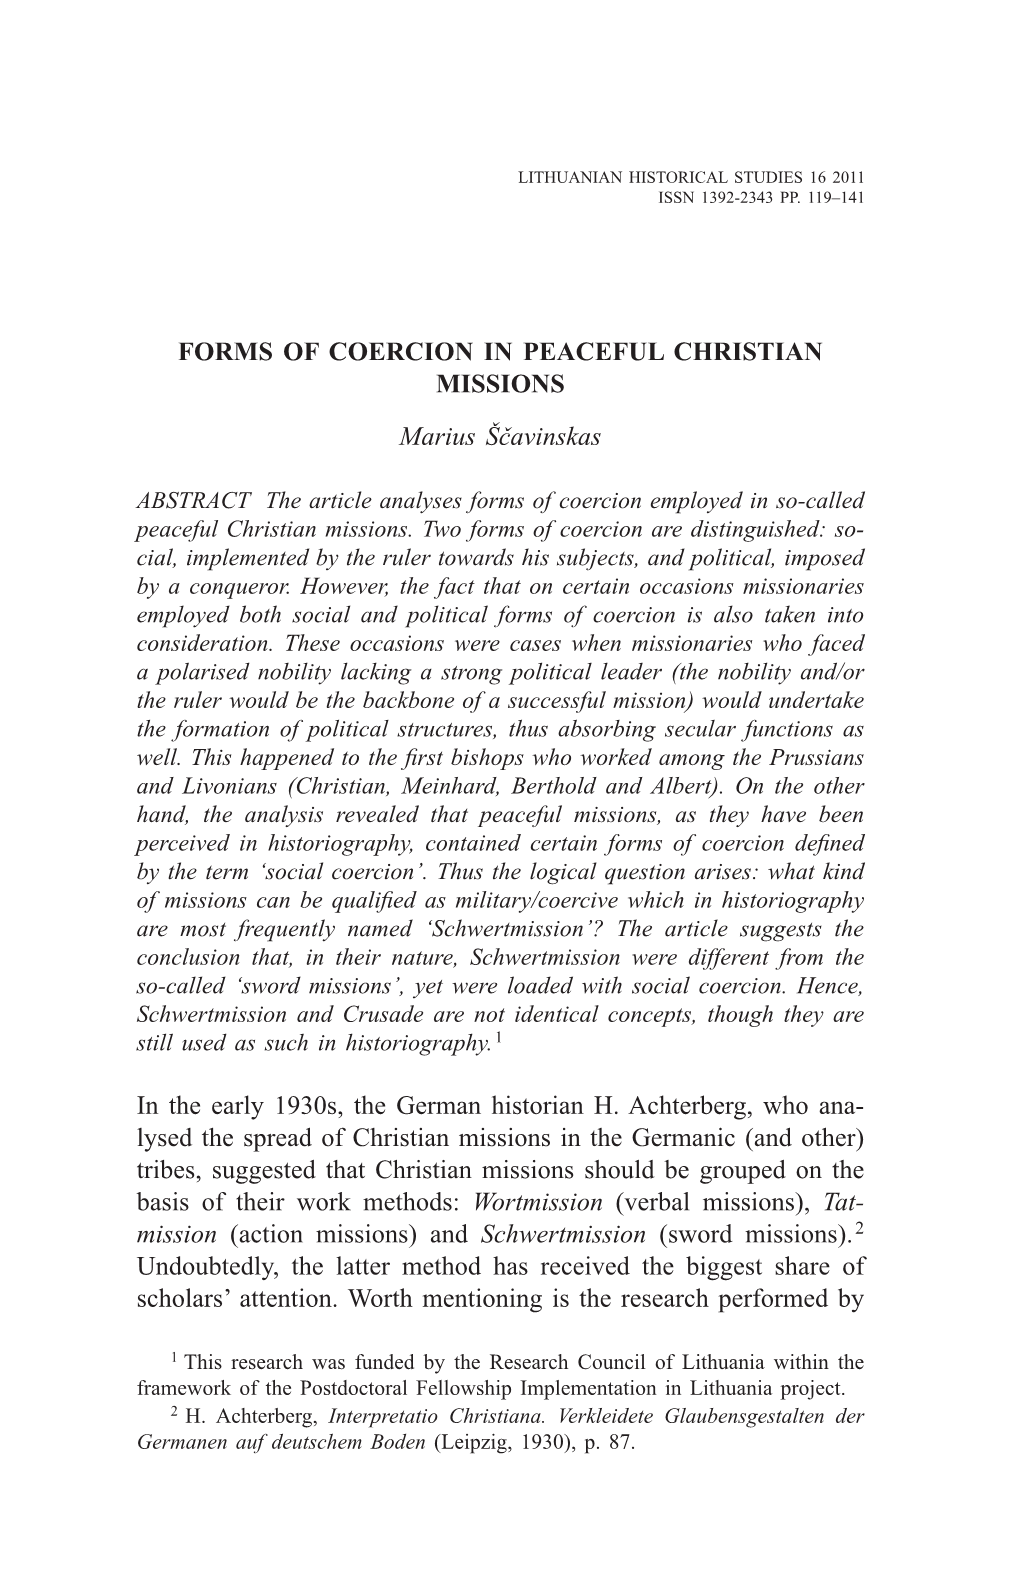 FORMS of COERCION in PEACEFUL CHRISTIAN MISSIONS Marius Ščavinskas